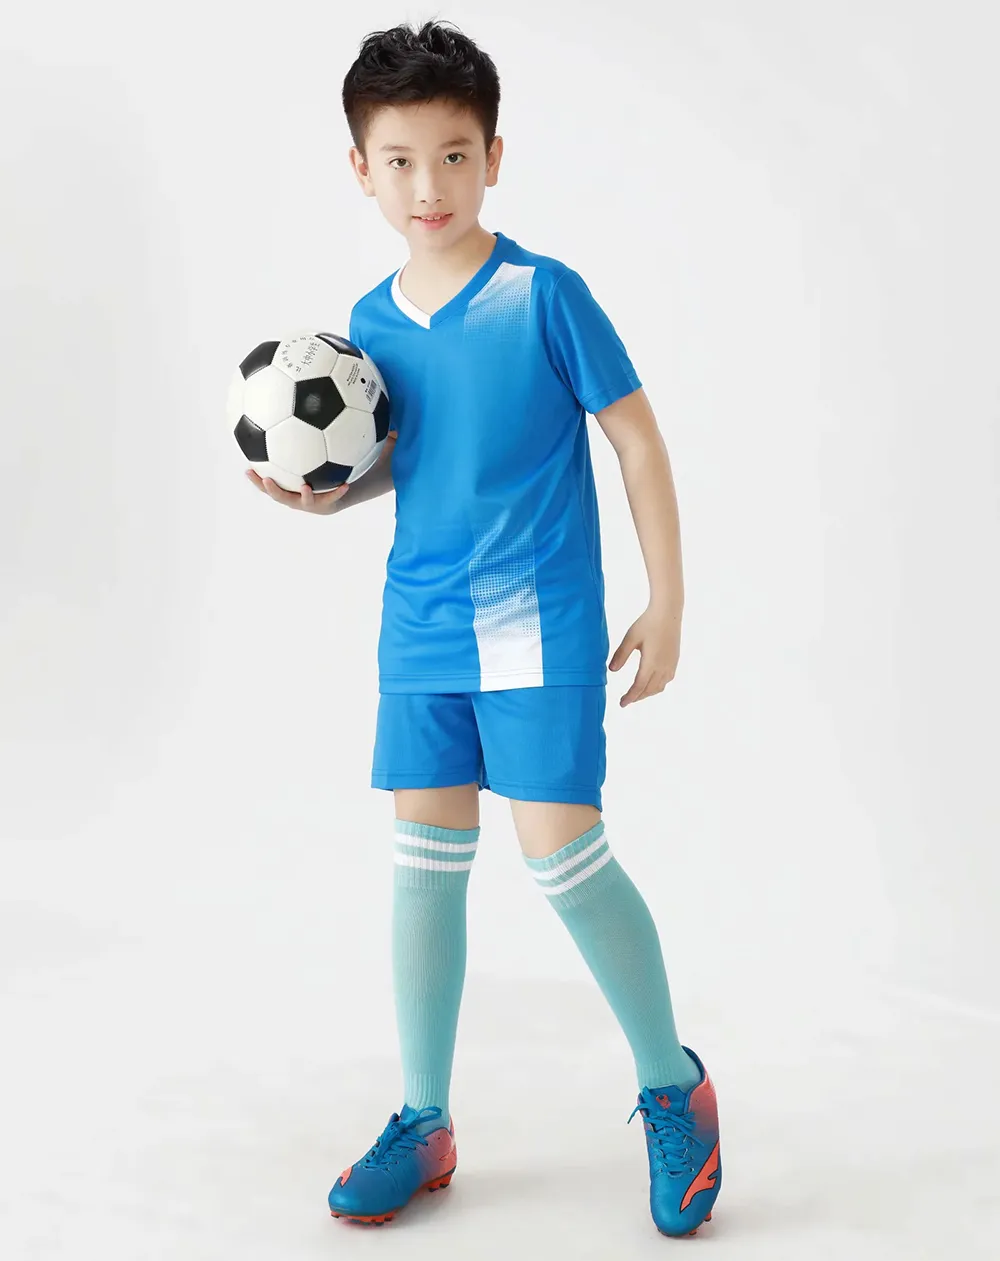 Jessie_kicks # G461 LJR aiir Joordan 5 Design 2021 Fashion Jerseys Kids Clothing Ourtdoor Sport